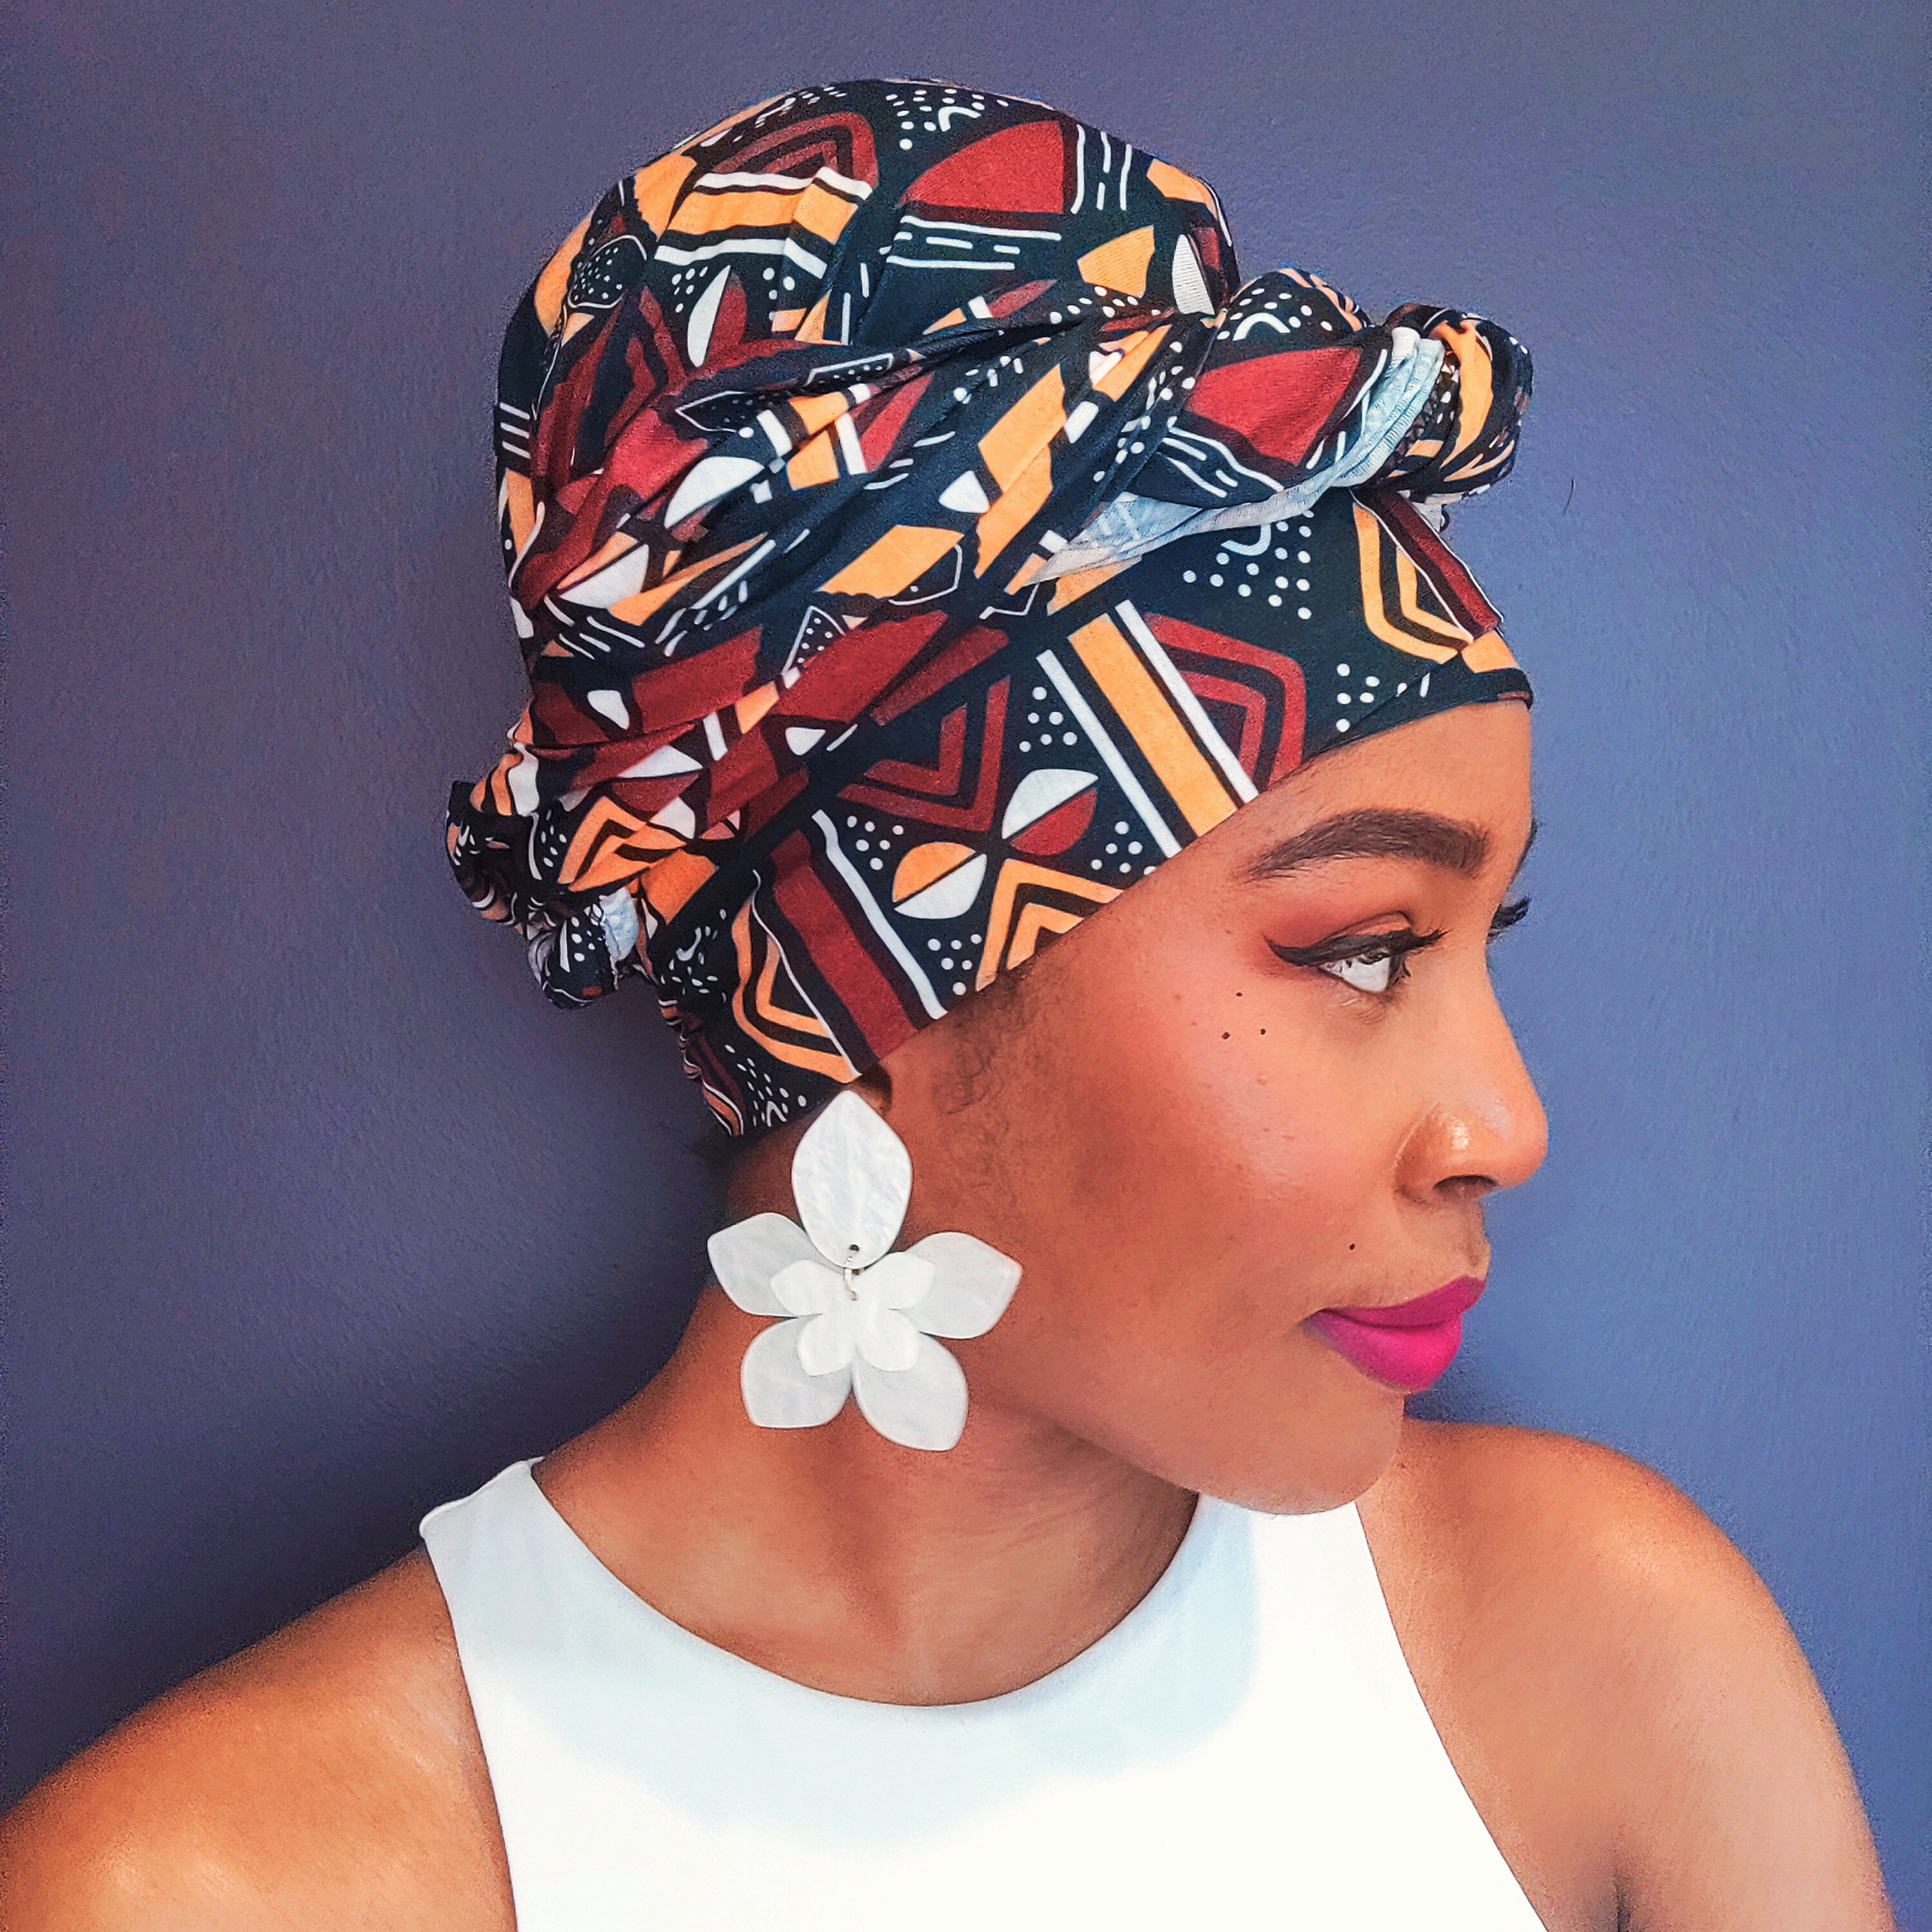 9 Pieces Women Head Wrap Scarf Turban Head Wrap Soft Long Head Scarves  African Turban Head Wrap for Women Girls